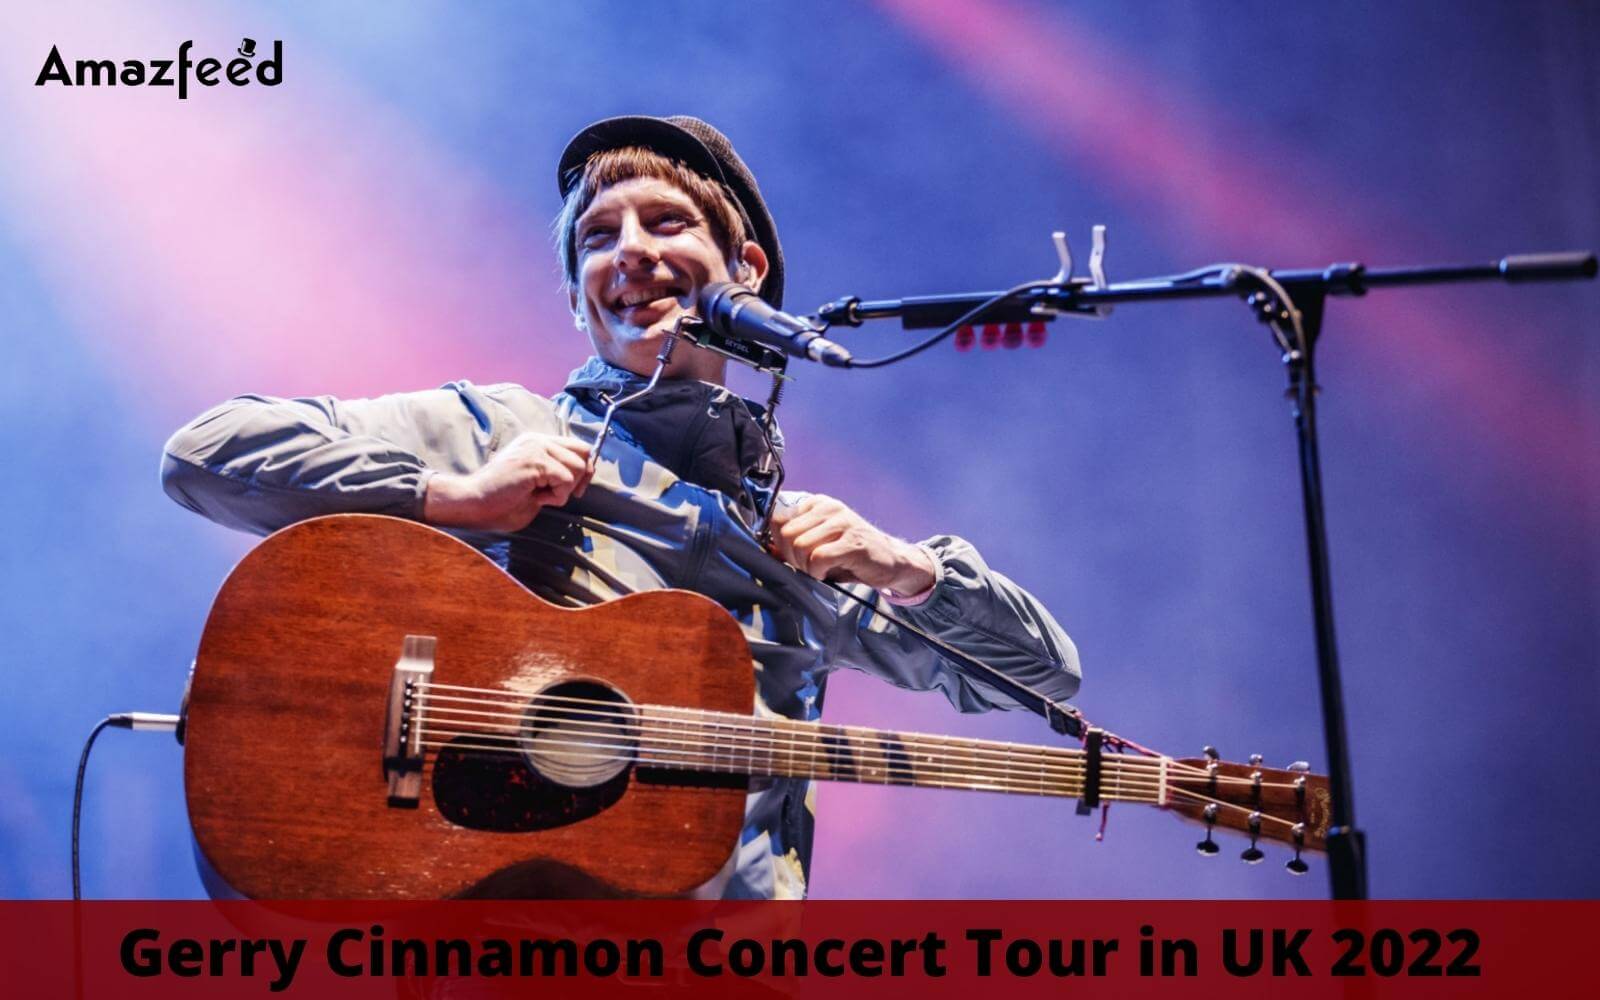 Gerry Cinnamon Setlist 2022, Concert Tour Dates in 2022 | UK | Set List, Band Members